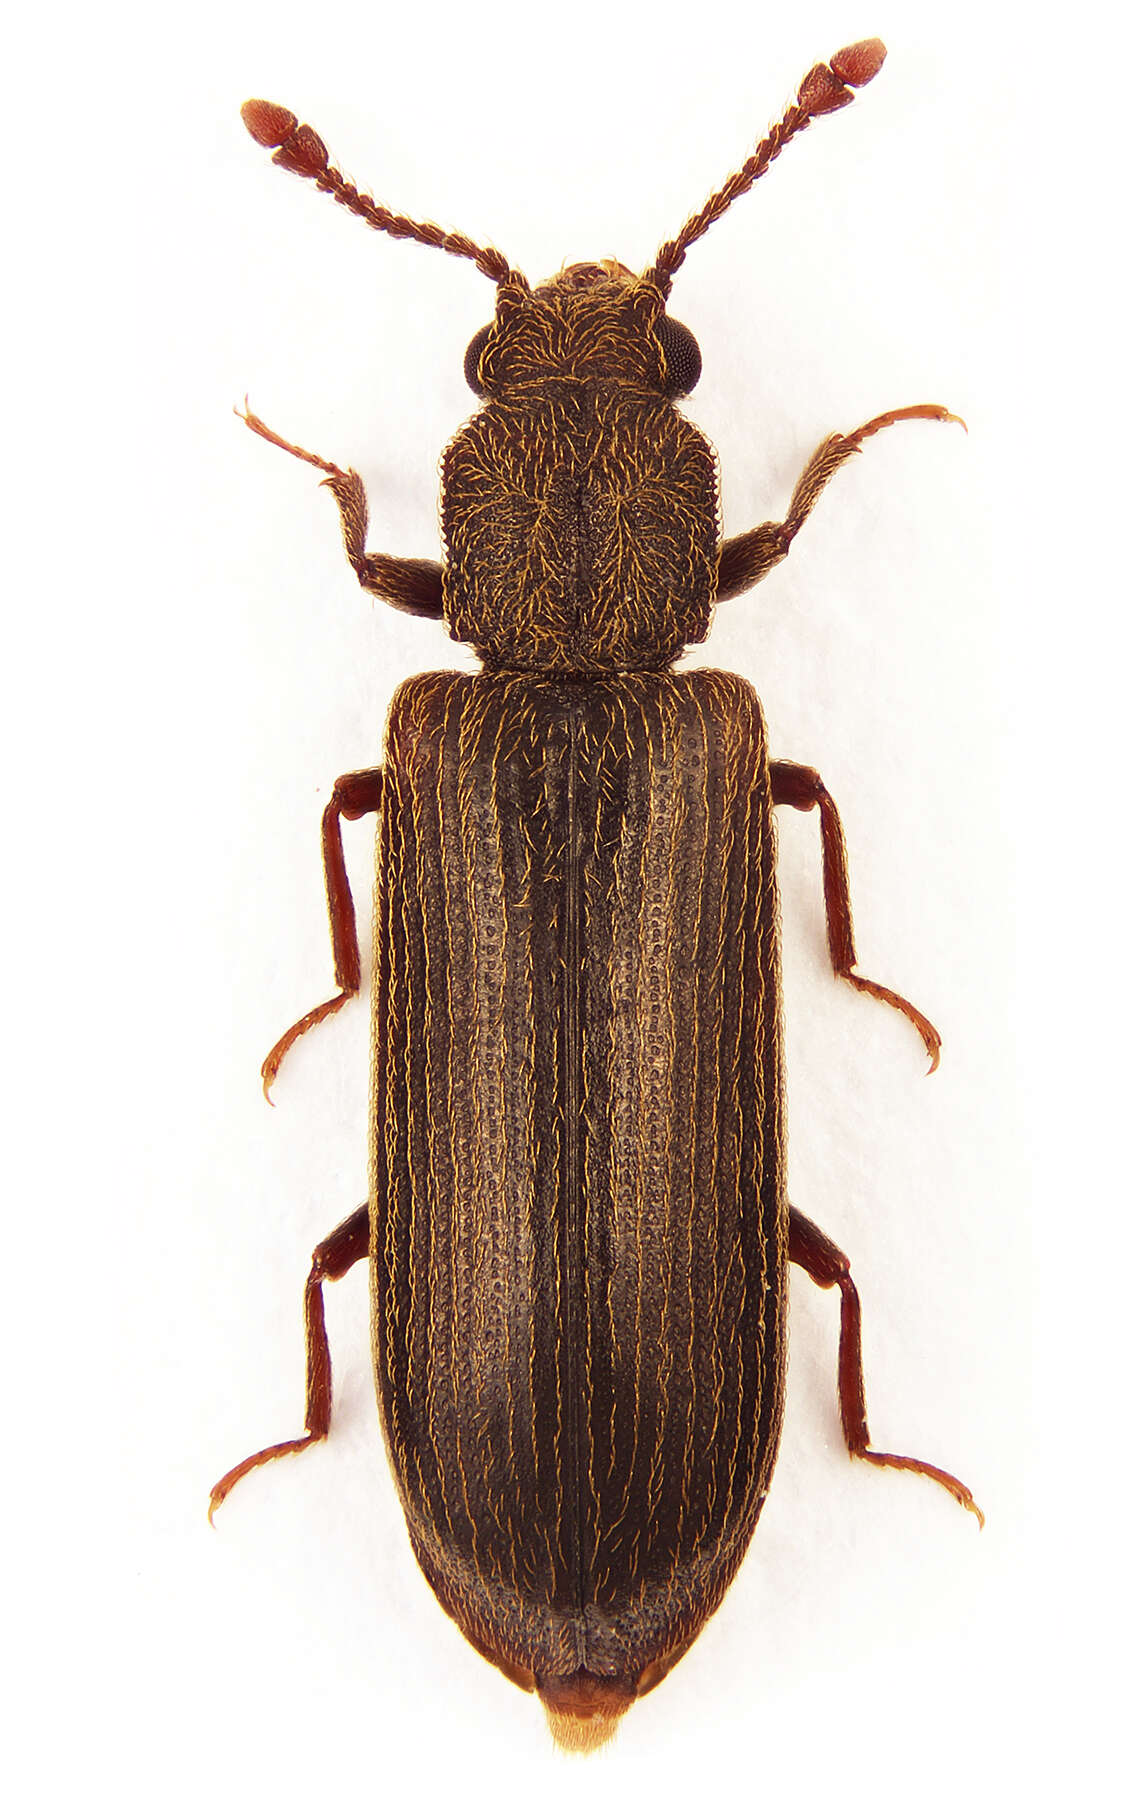 Image of Powderpost beetle